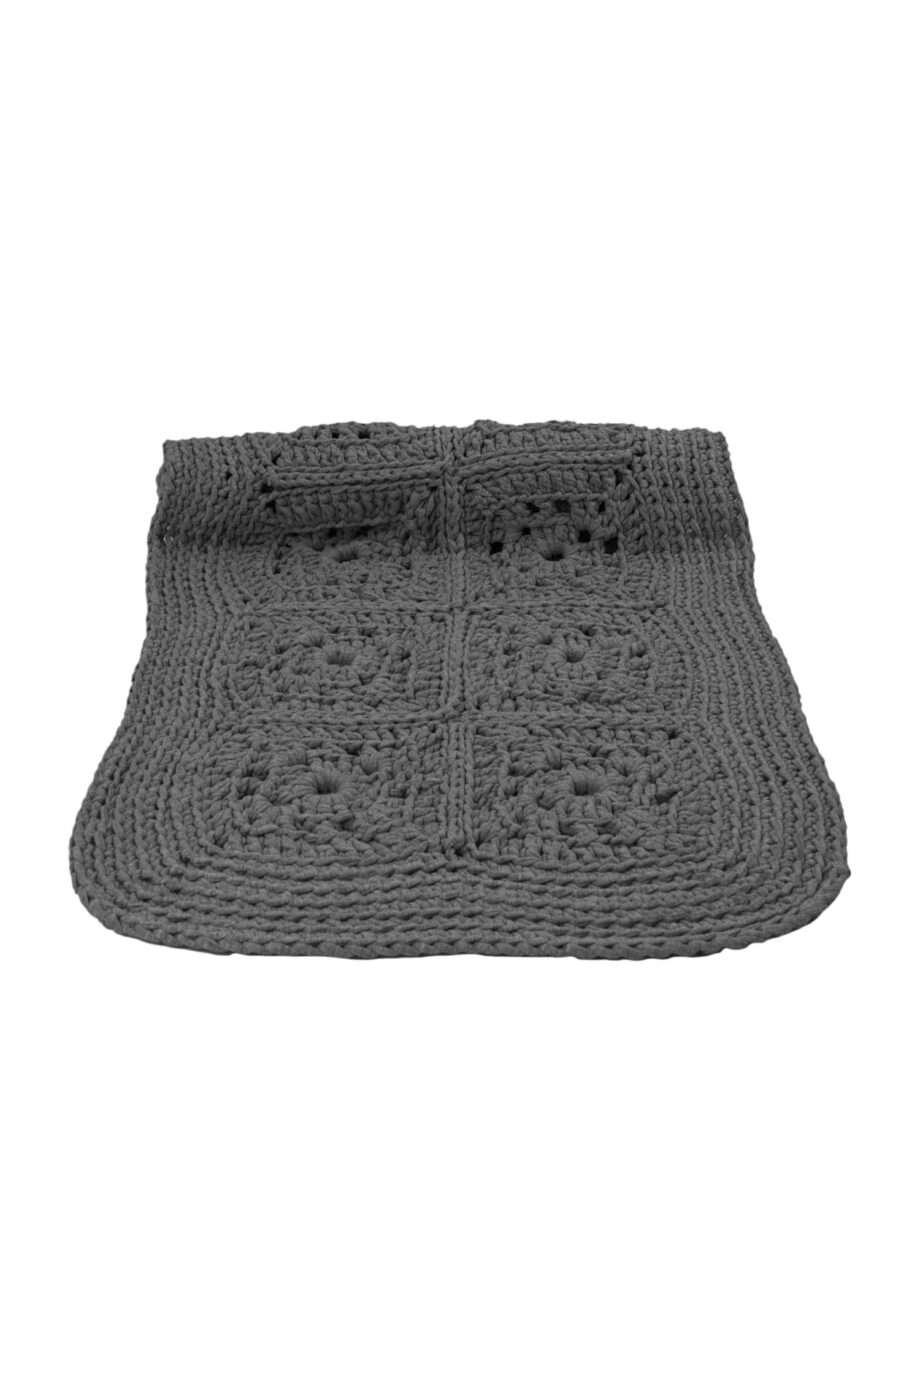 granny anthracite crochet cotton rug medium